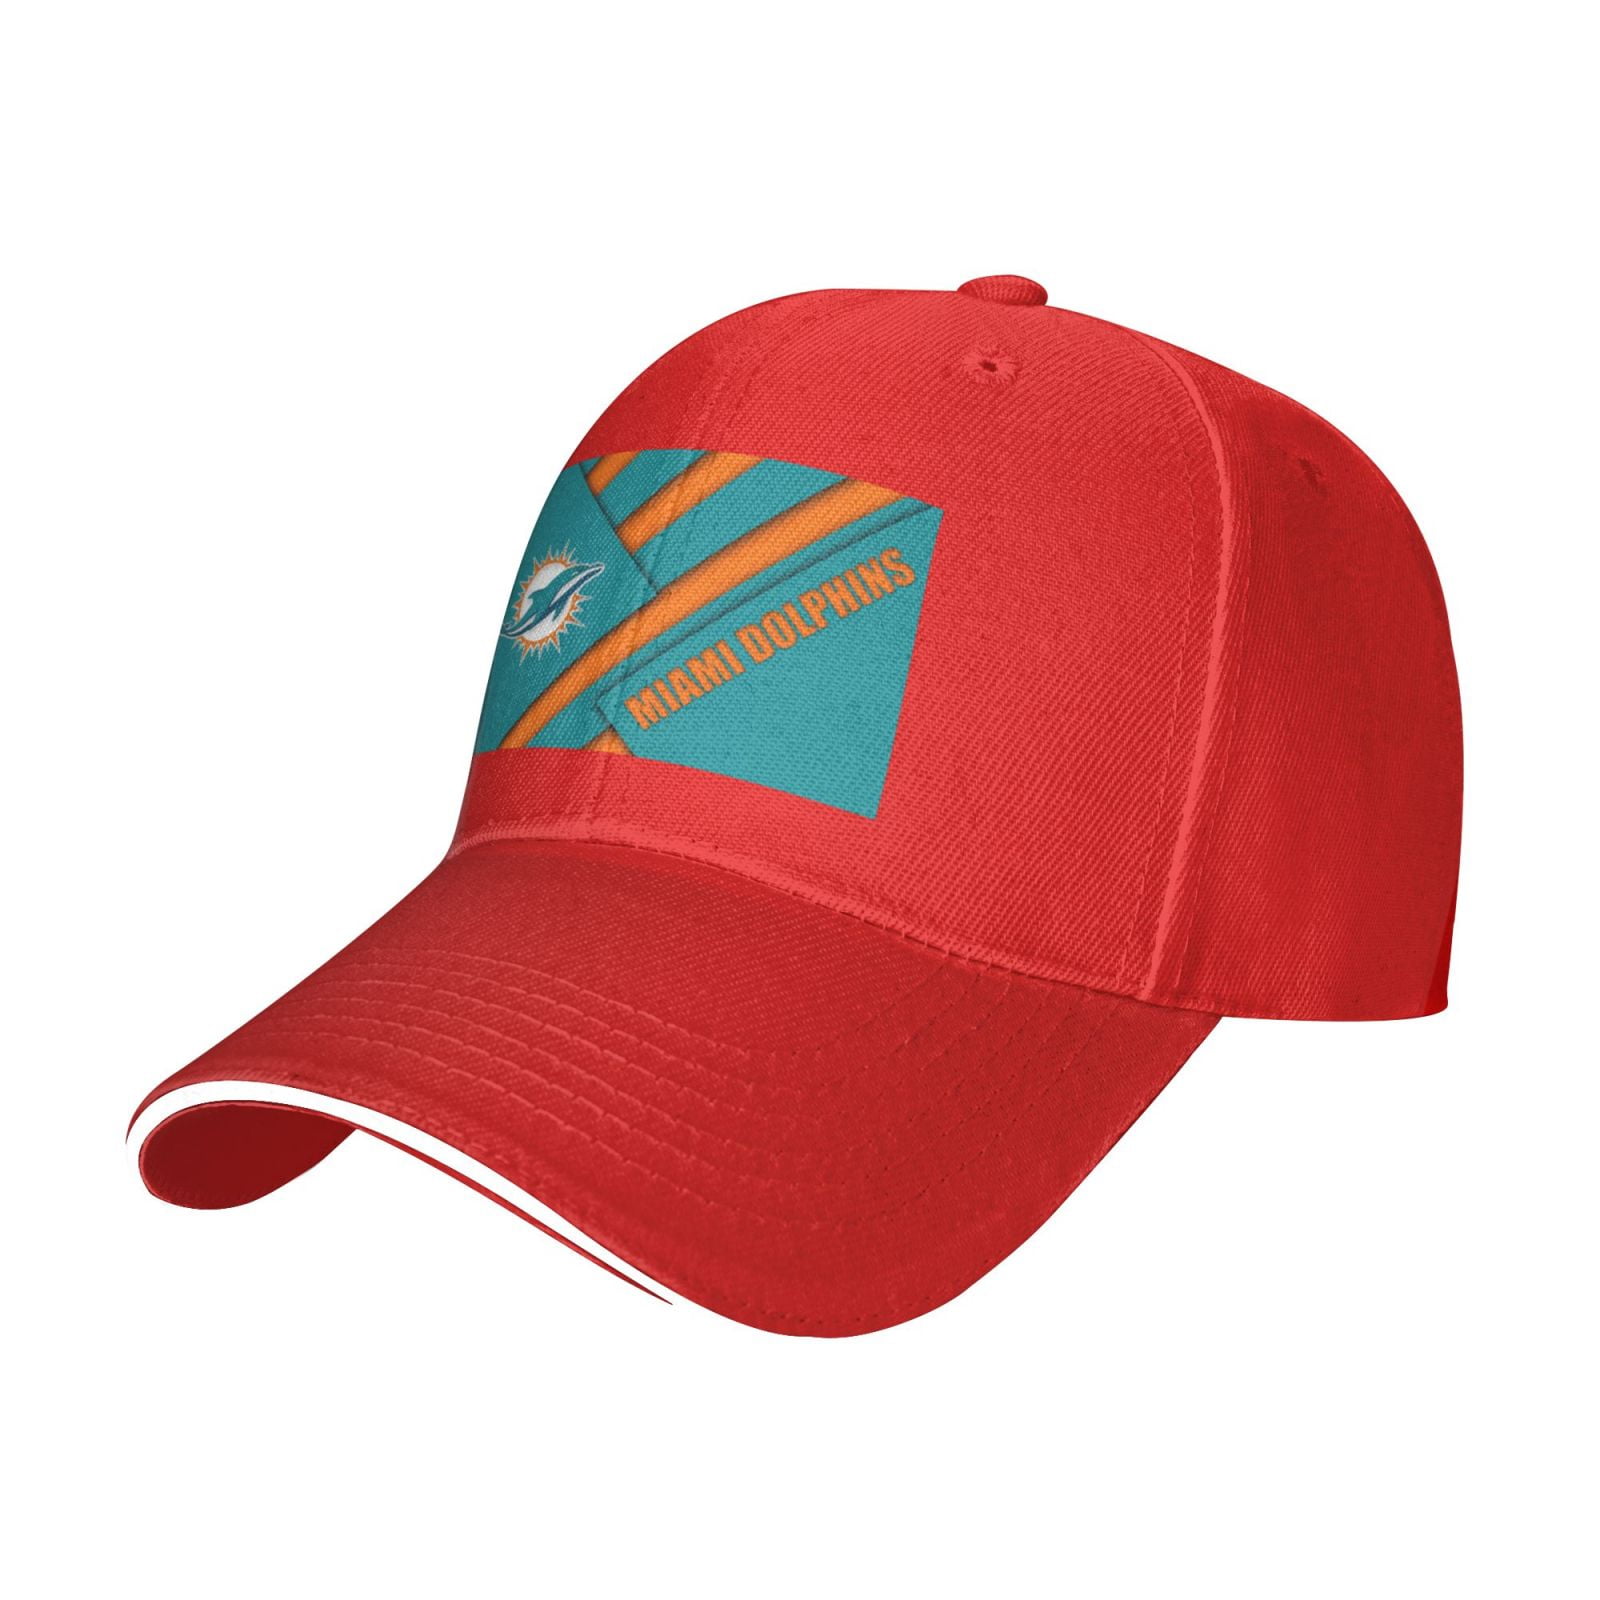 Miami-Dolphins Fashion Custom Hats Caps For Men Women, Adjustable ...